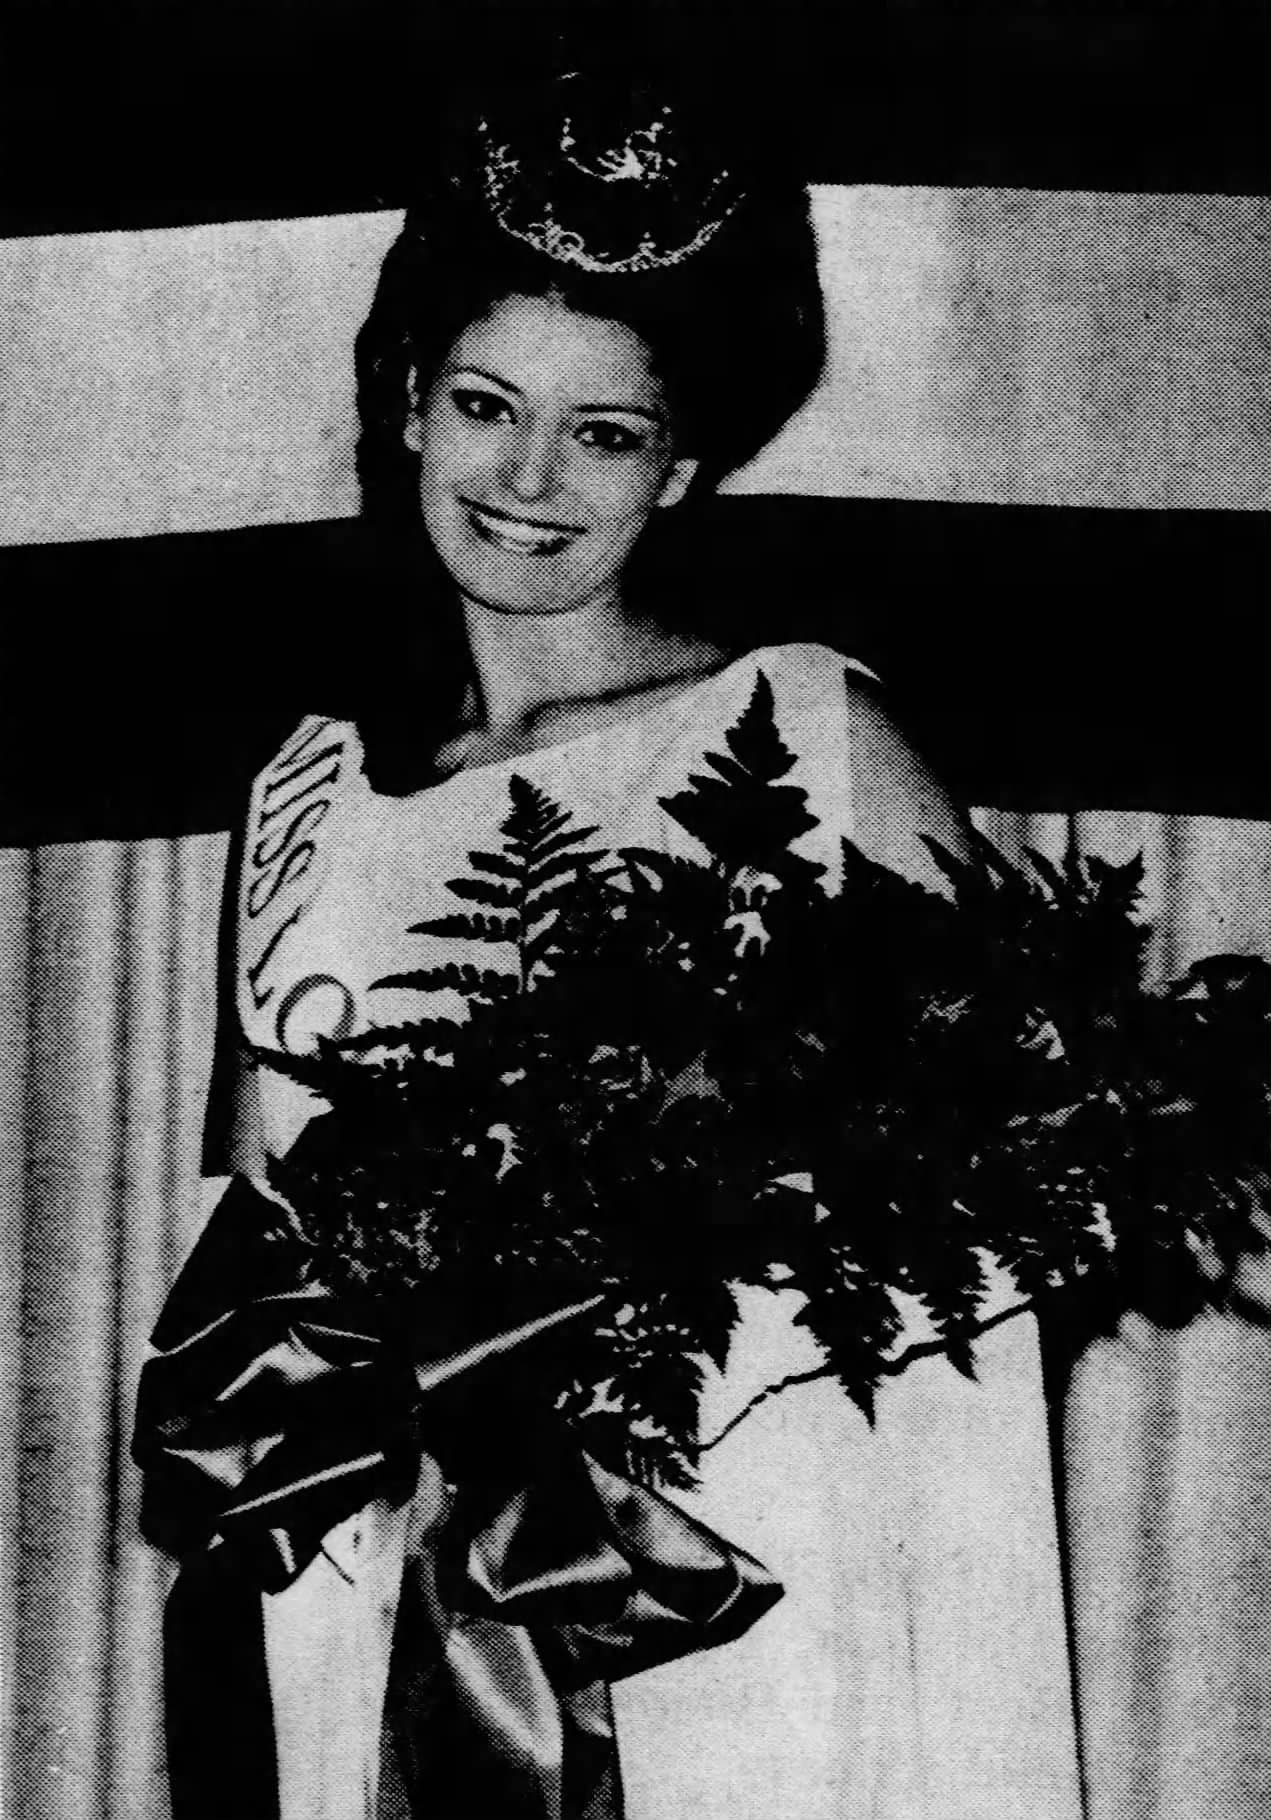 Kathy Hebert is crowned Miss Louisiana USA 1968